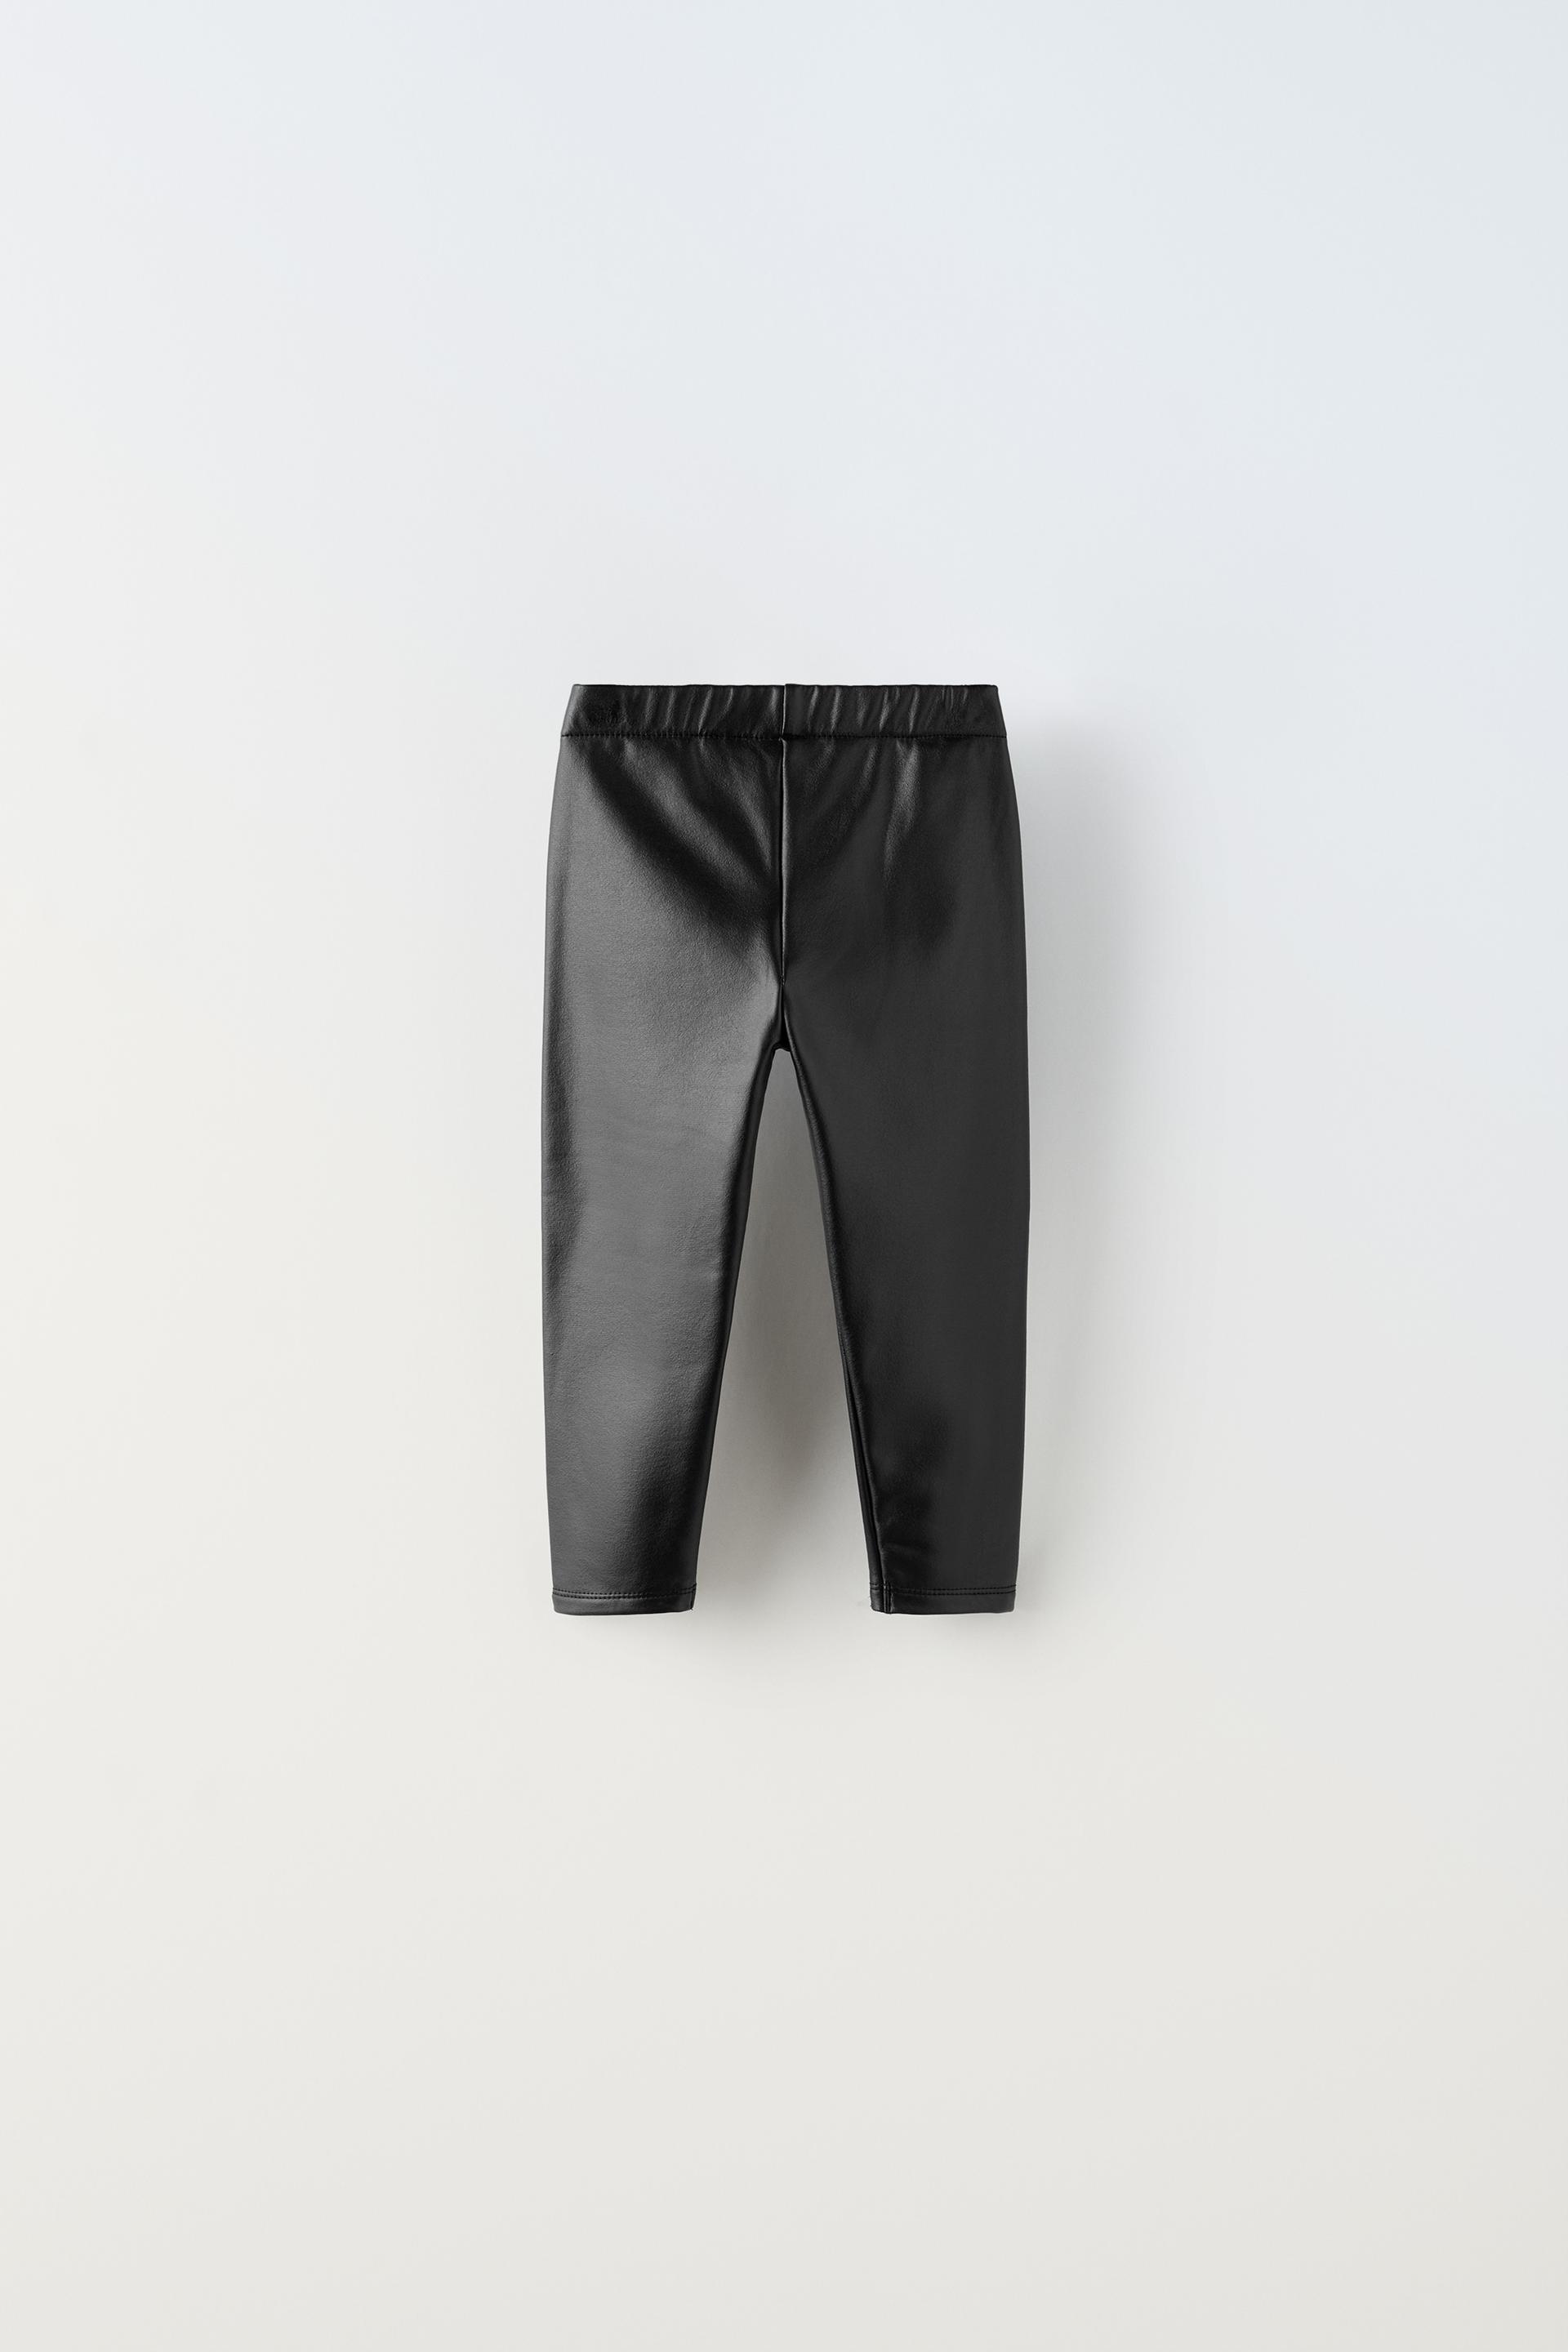 Zara Faux Leather Mini Flare Leggings Ecru 5427/233 Sz M 